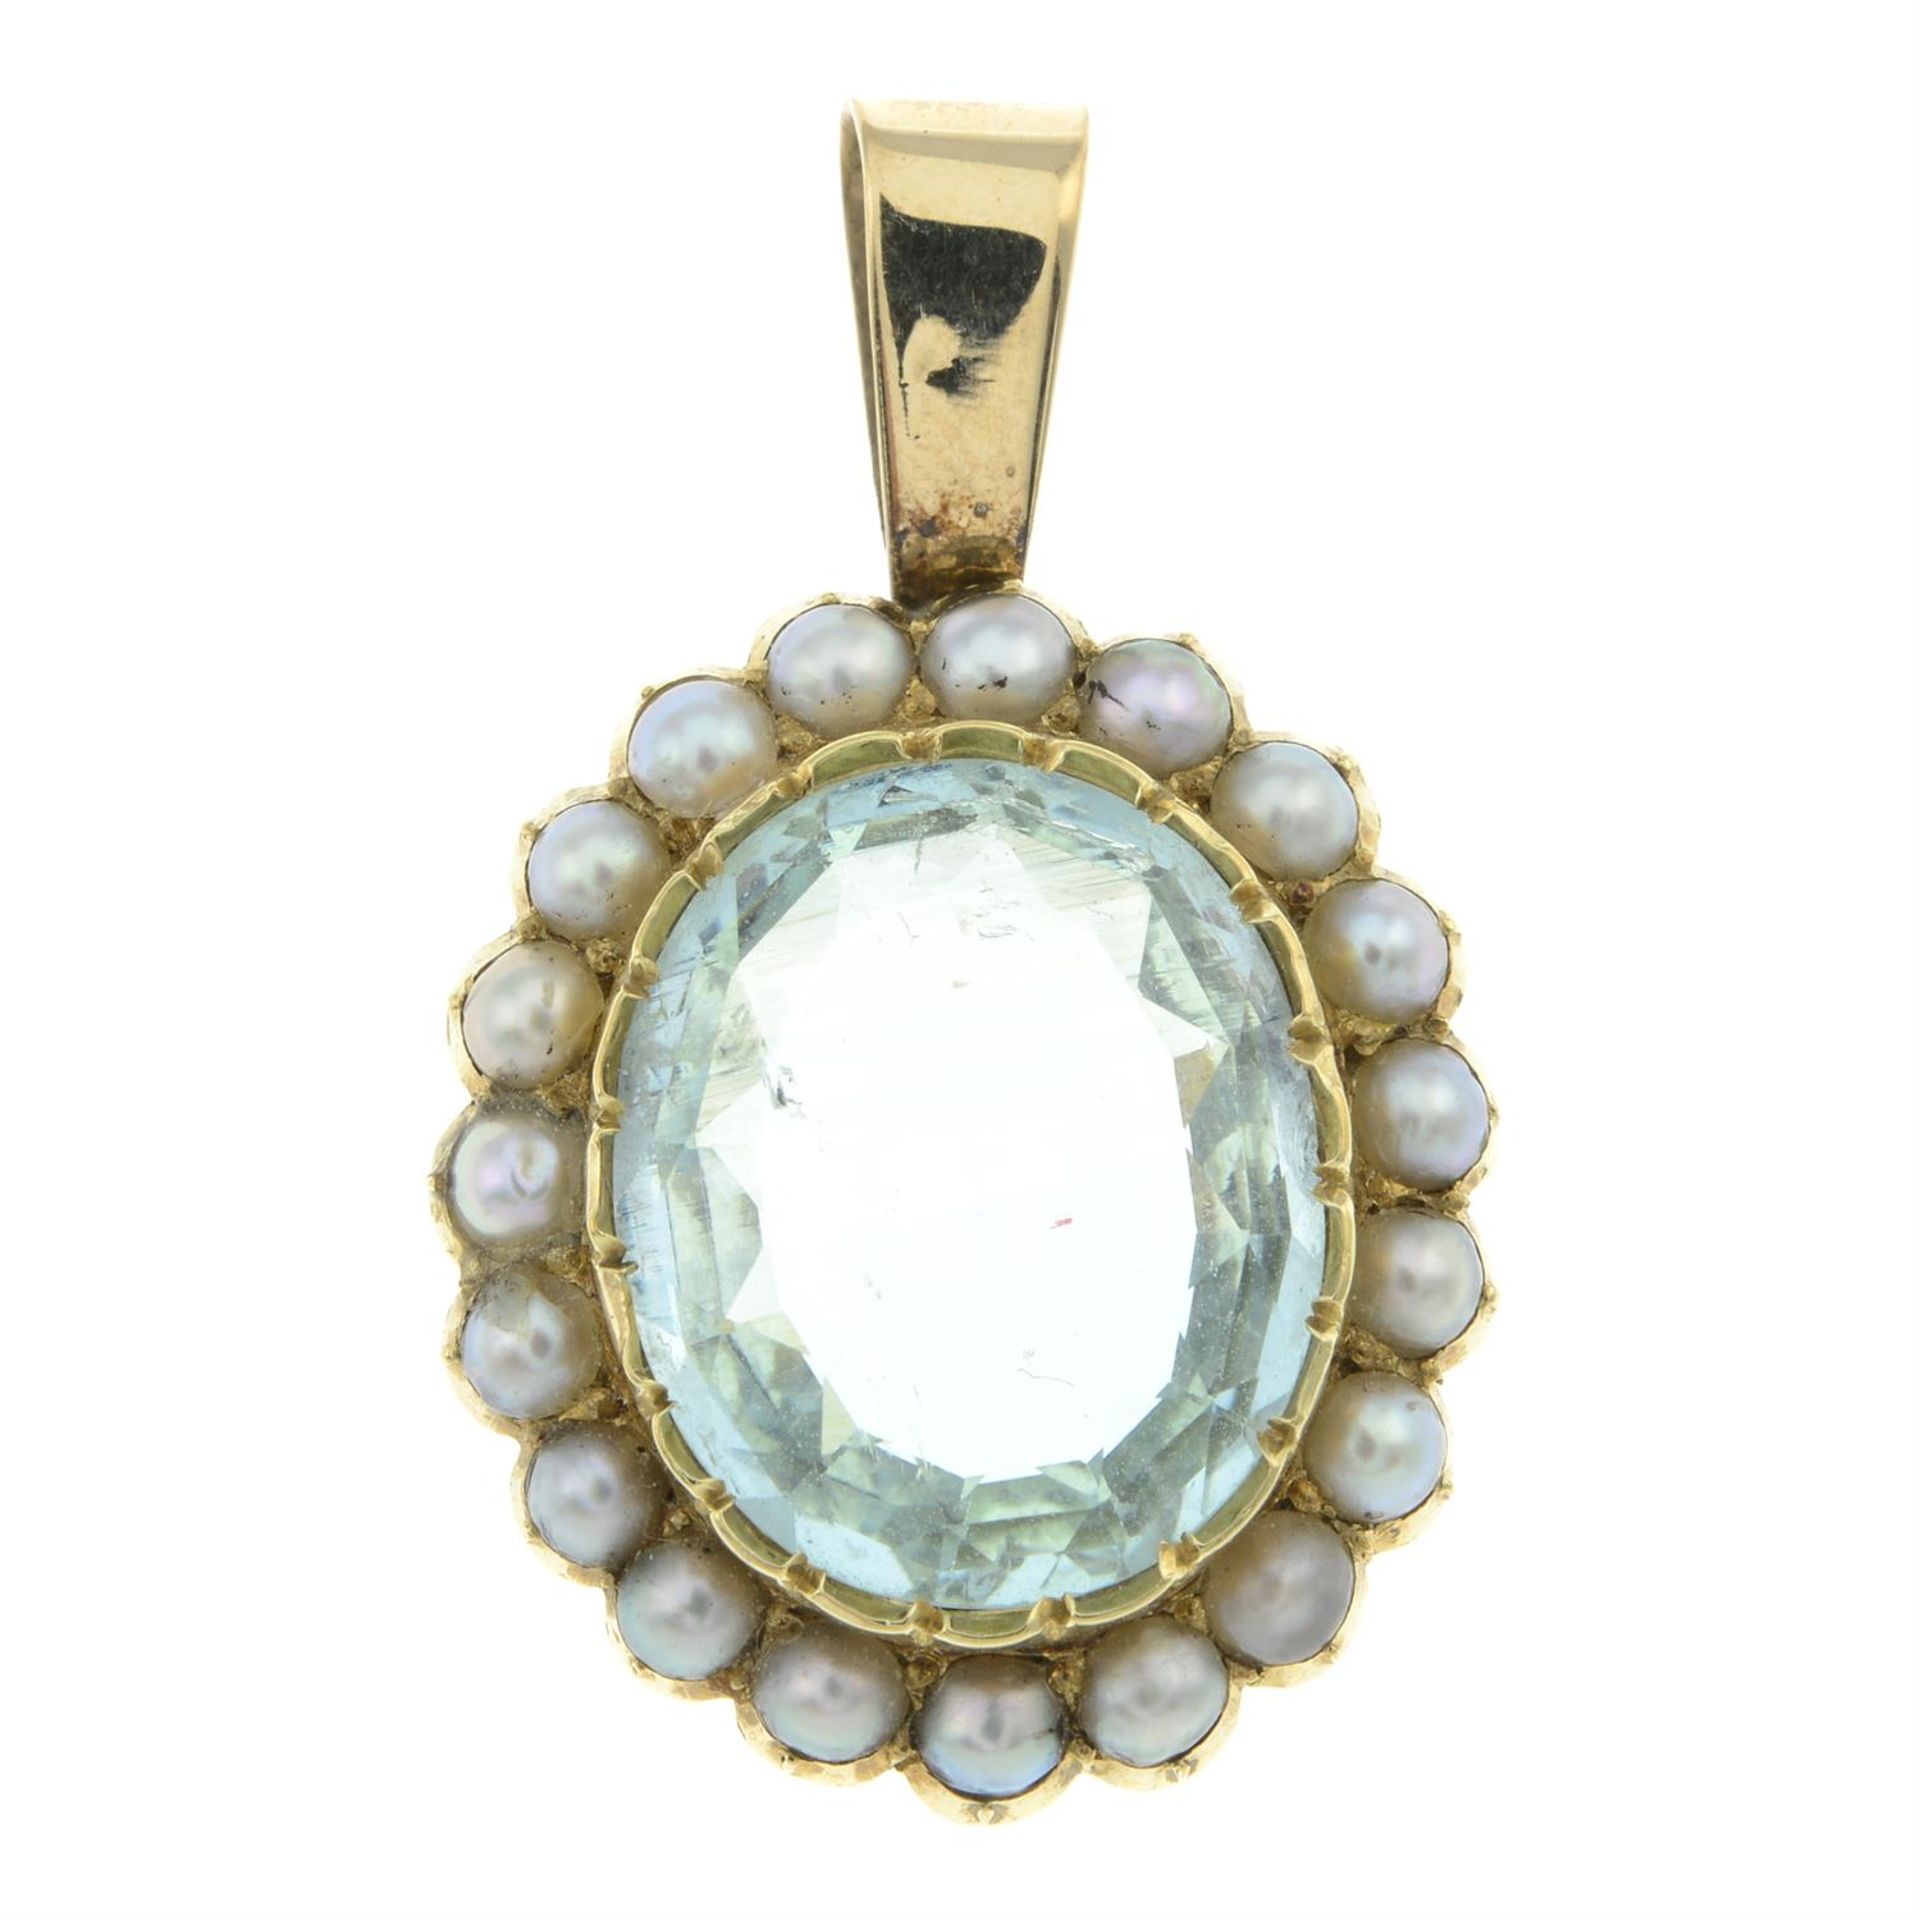 Early 20th century gold aquamarine & split pearl cluster pendant